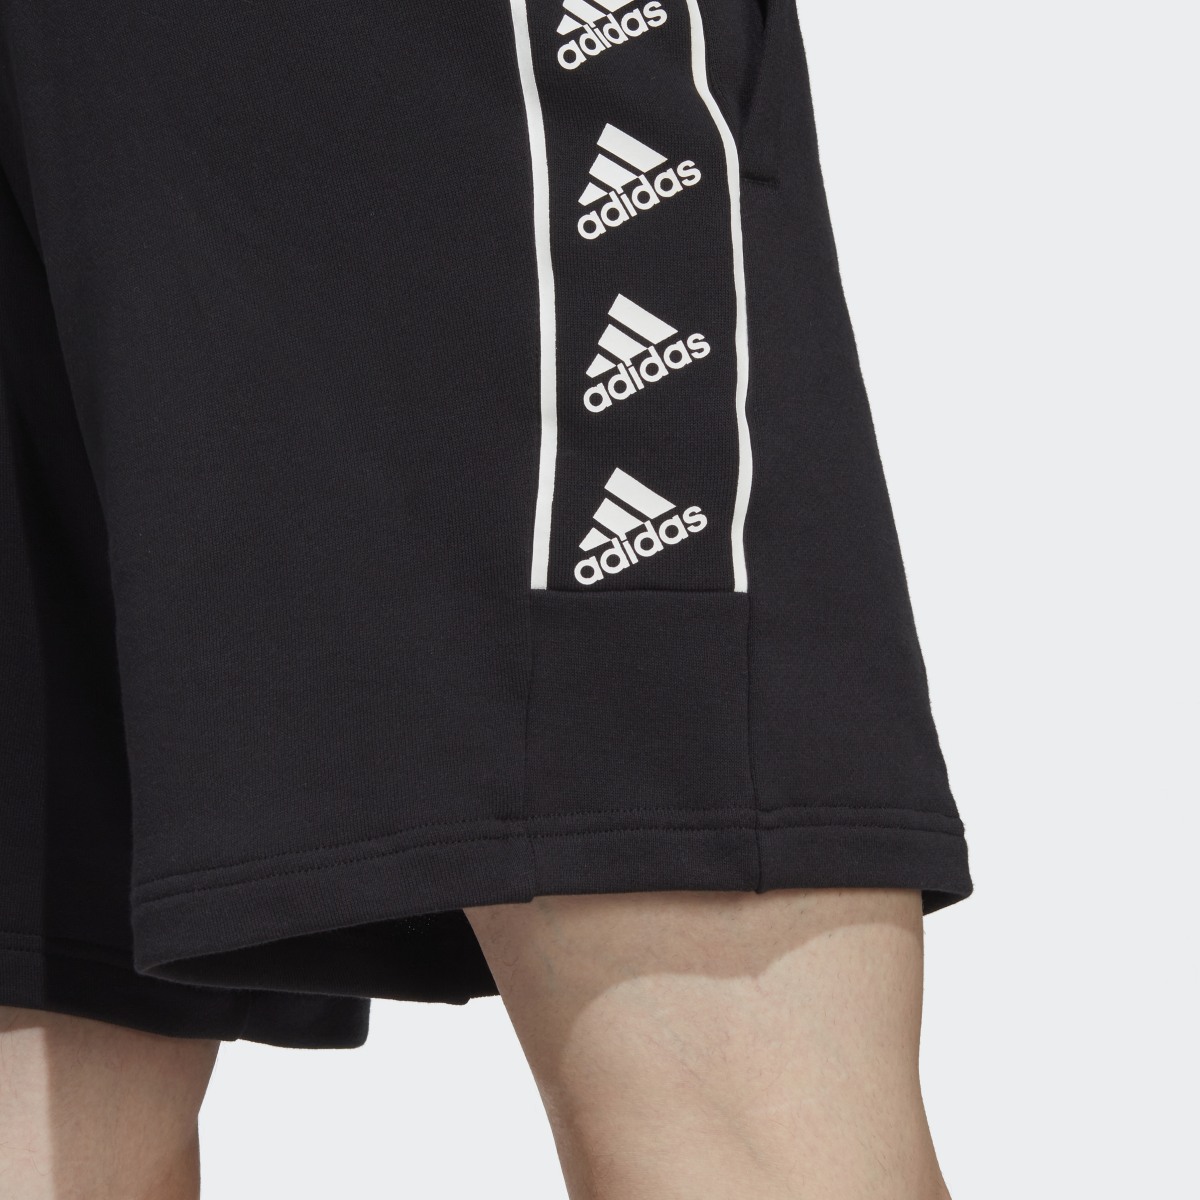 Adidas Brandlove Shorts. 6